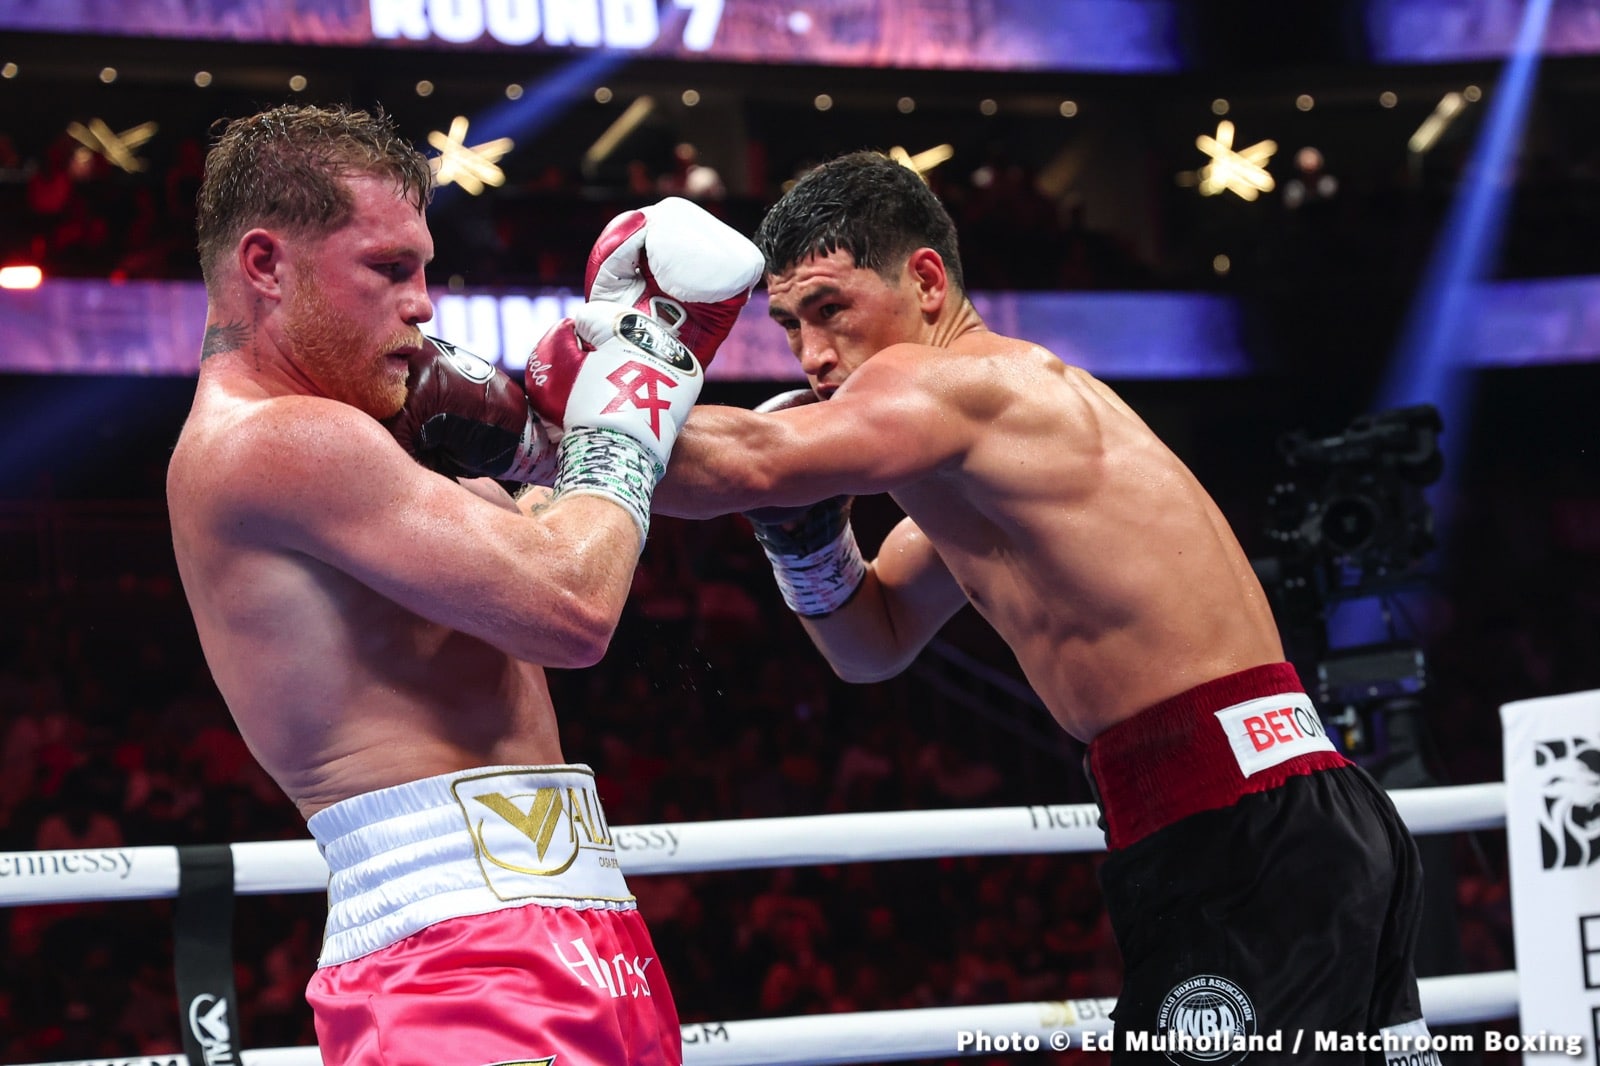 Canelo Alvarez on Dmitry Bivol: "I know I'm going to beat him in the rematch"